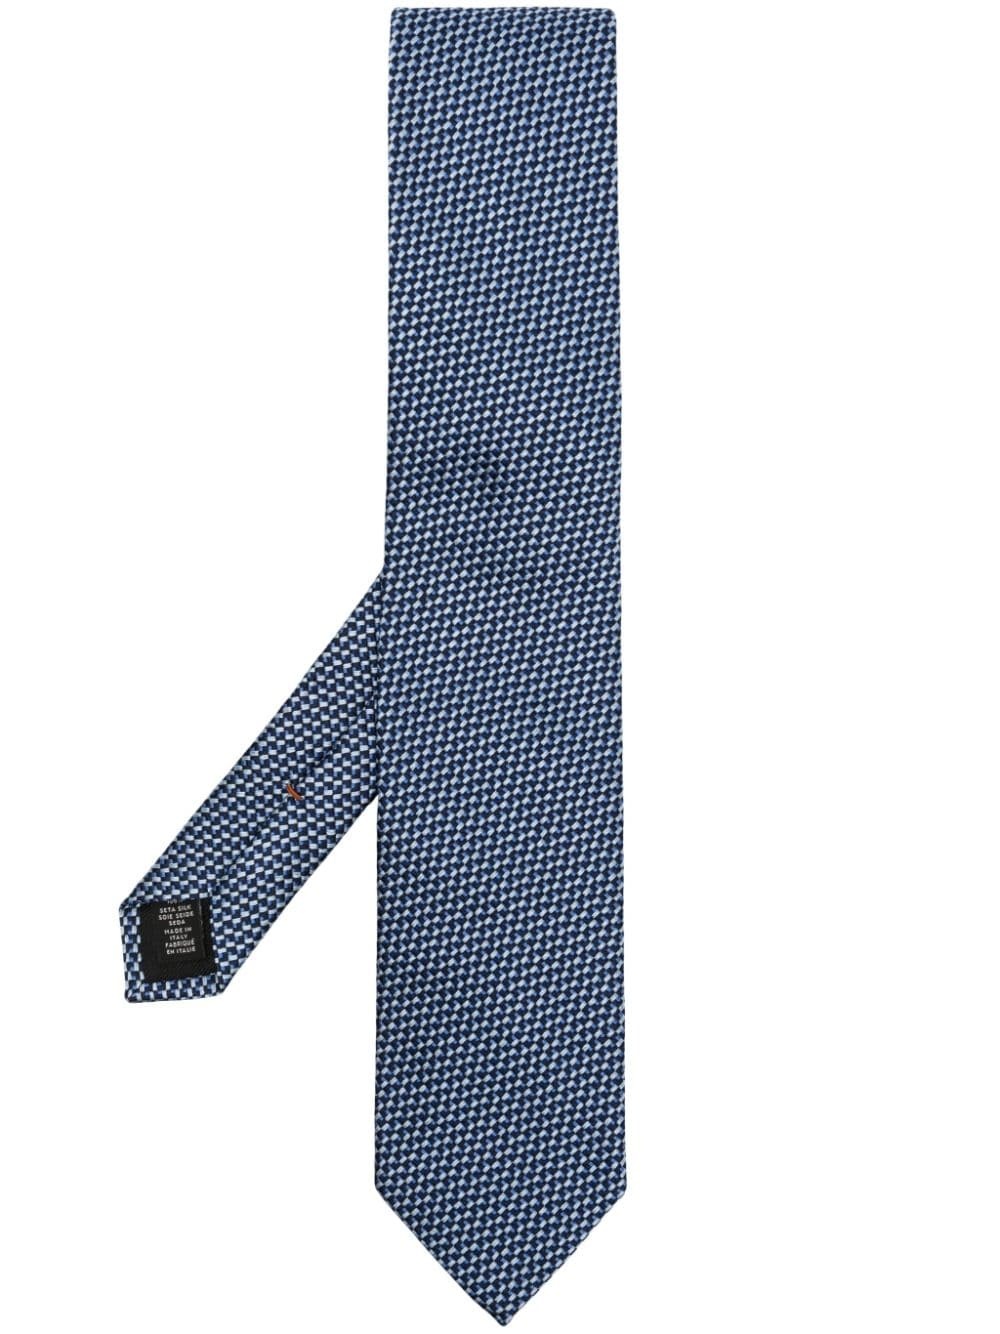 embroidered silk tie - 1